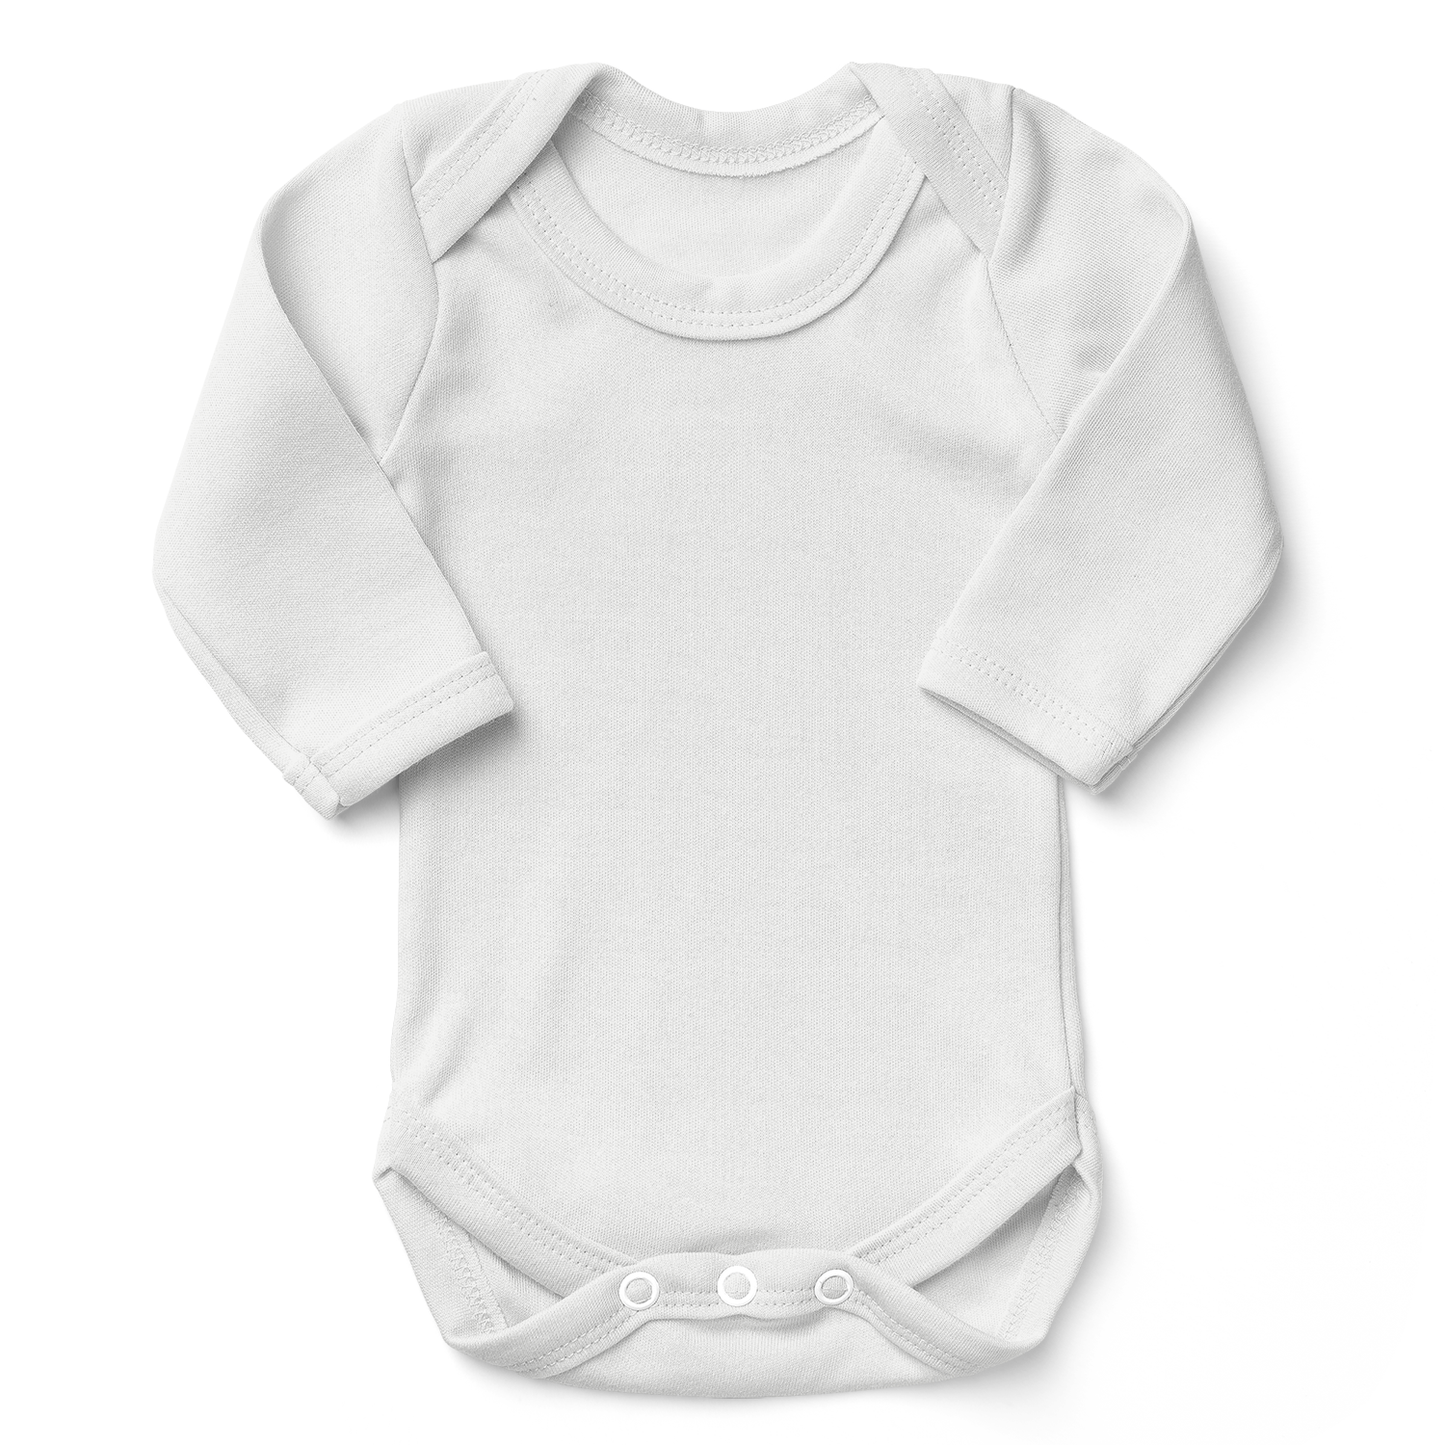 [Custom Text] Endanzoo Organic Baby Bodysuit Long Sleeves